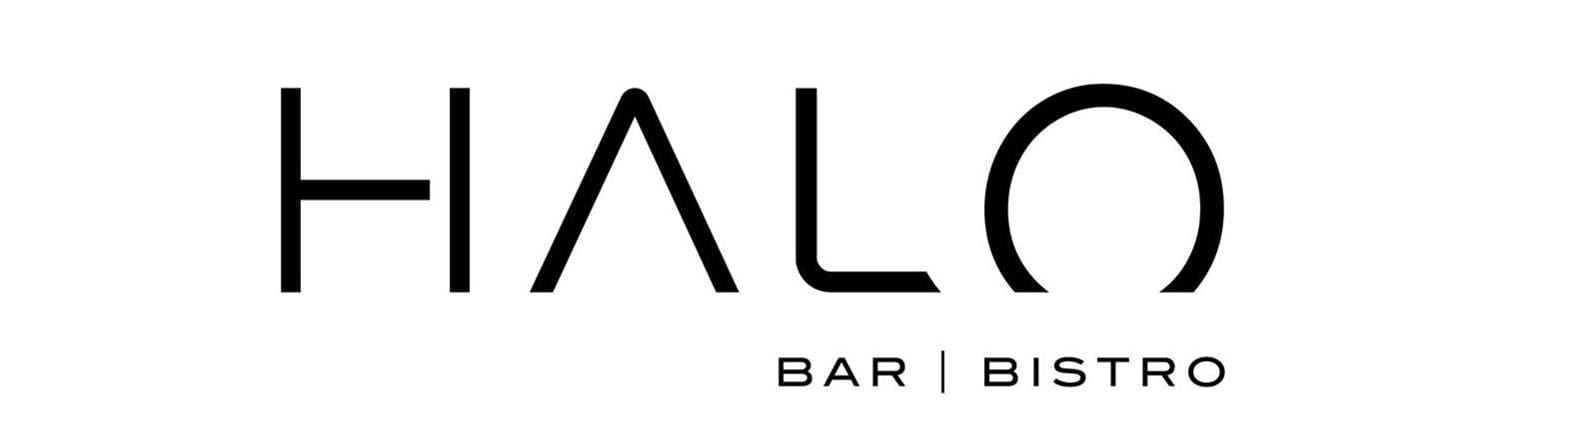 Halo Bar I Bistro